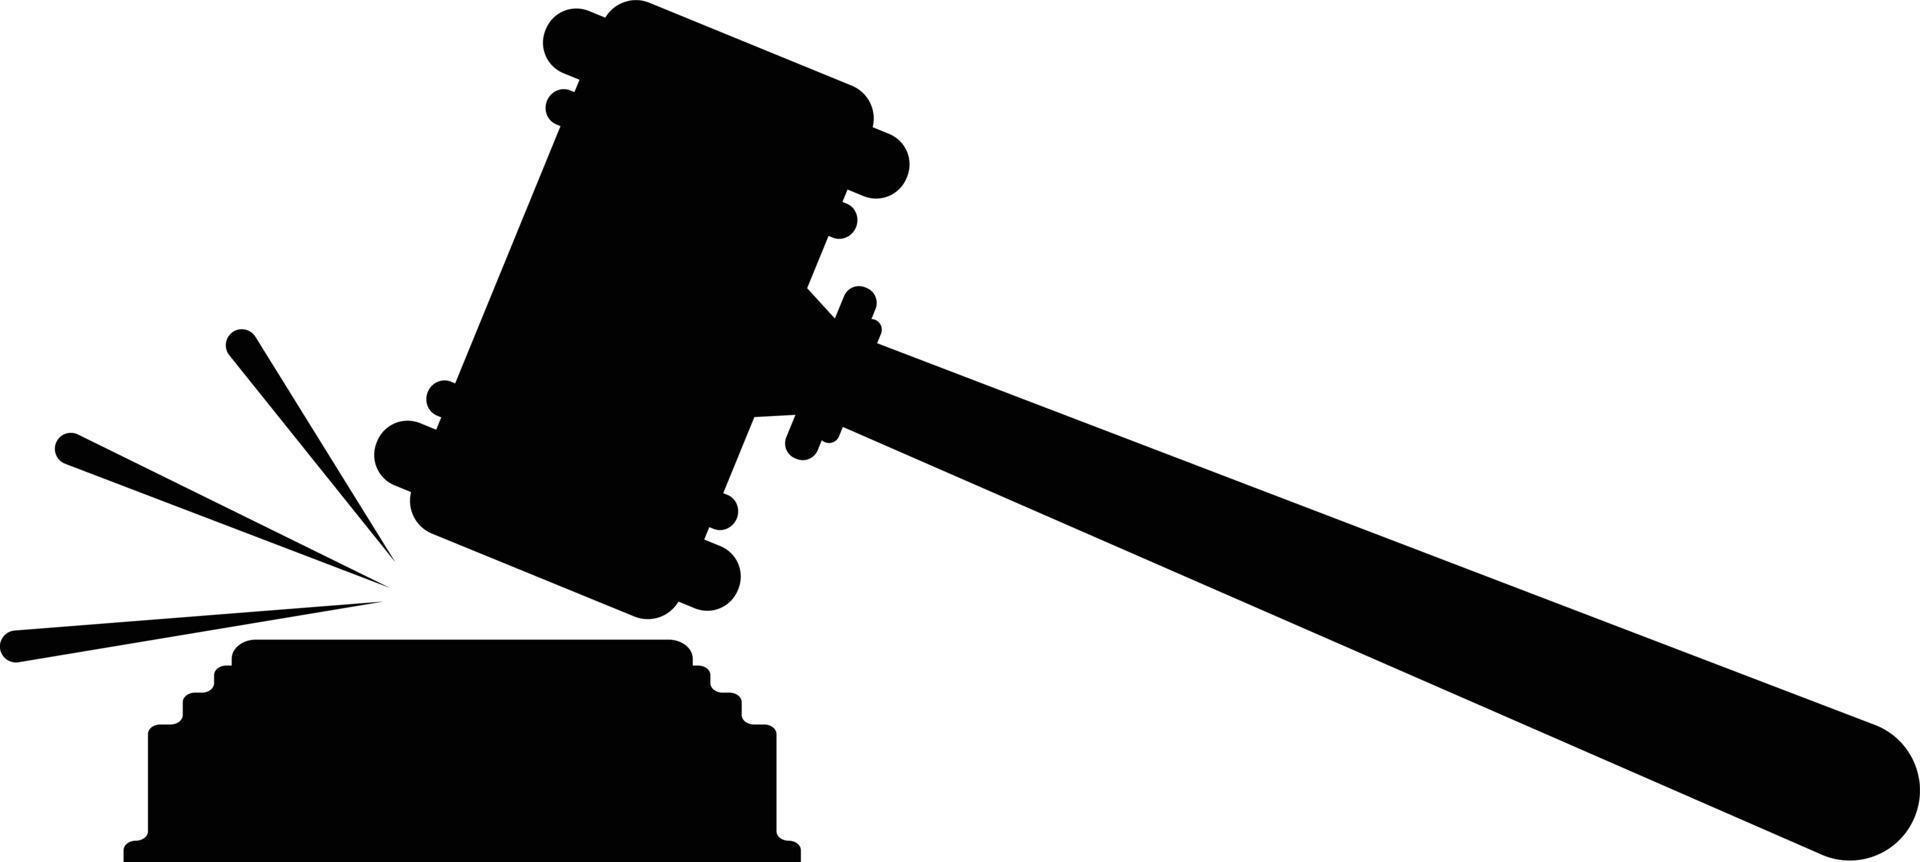 Law Hammer, Judge Gavel Icon vector